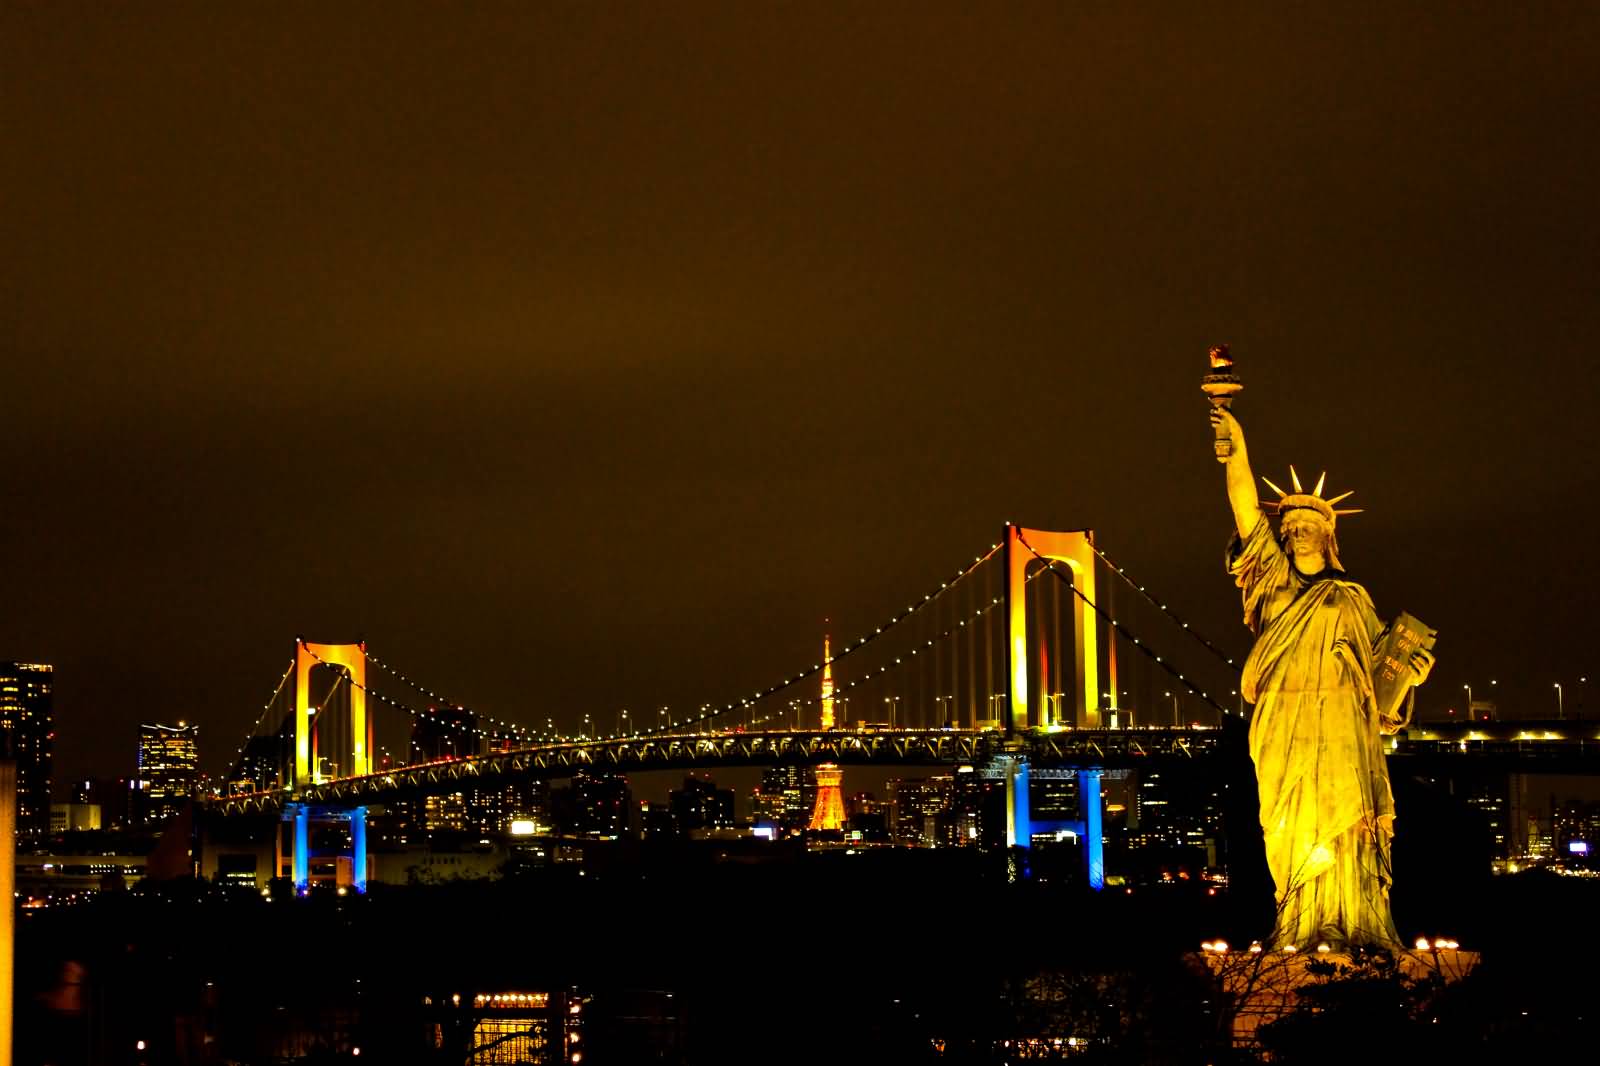 Statue Of Liberty And Harbor Bridge Lit Up At Night